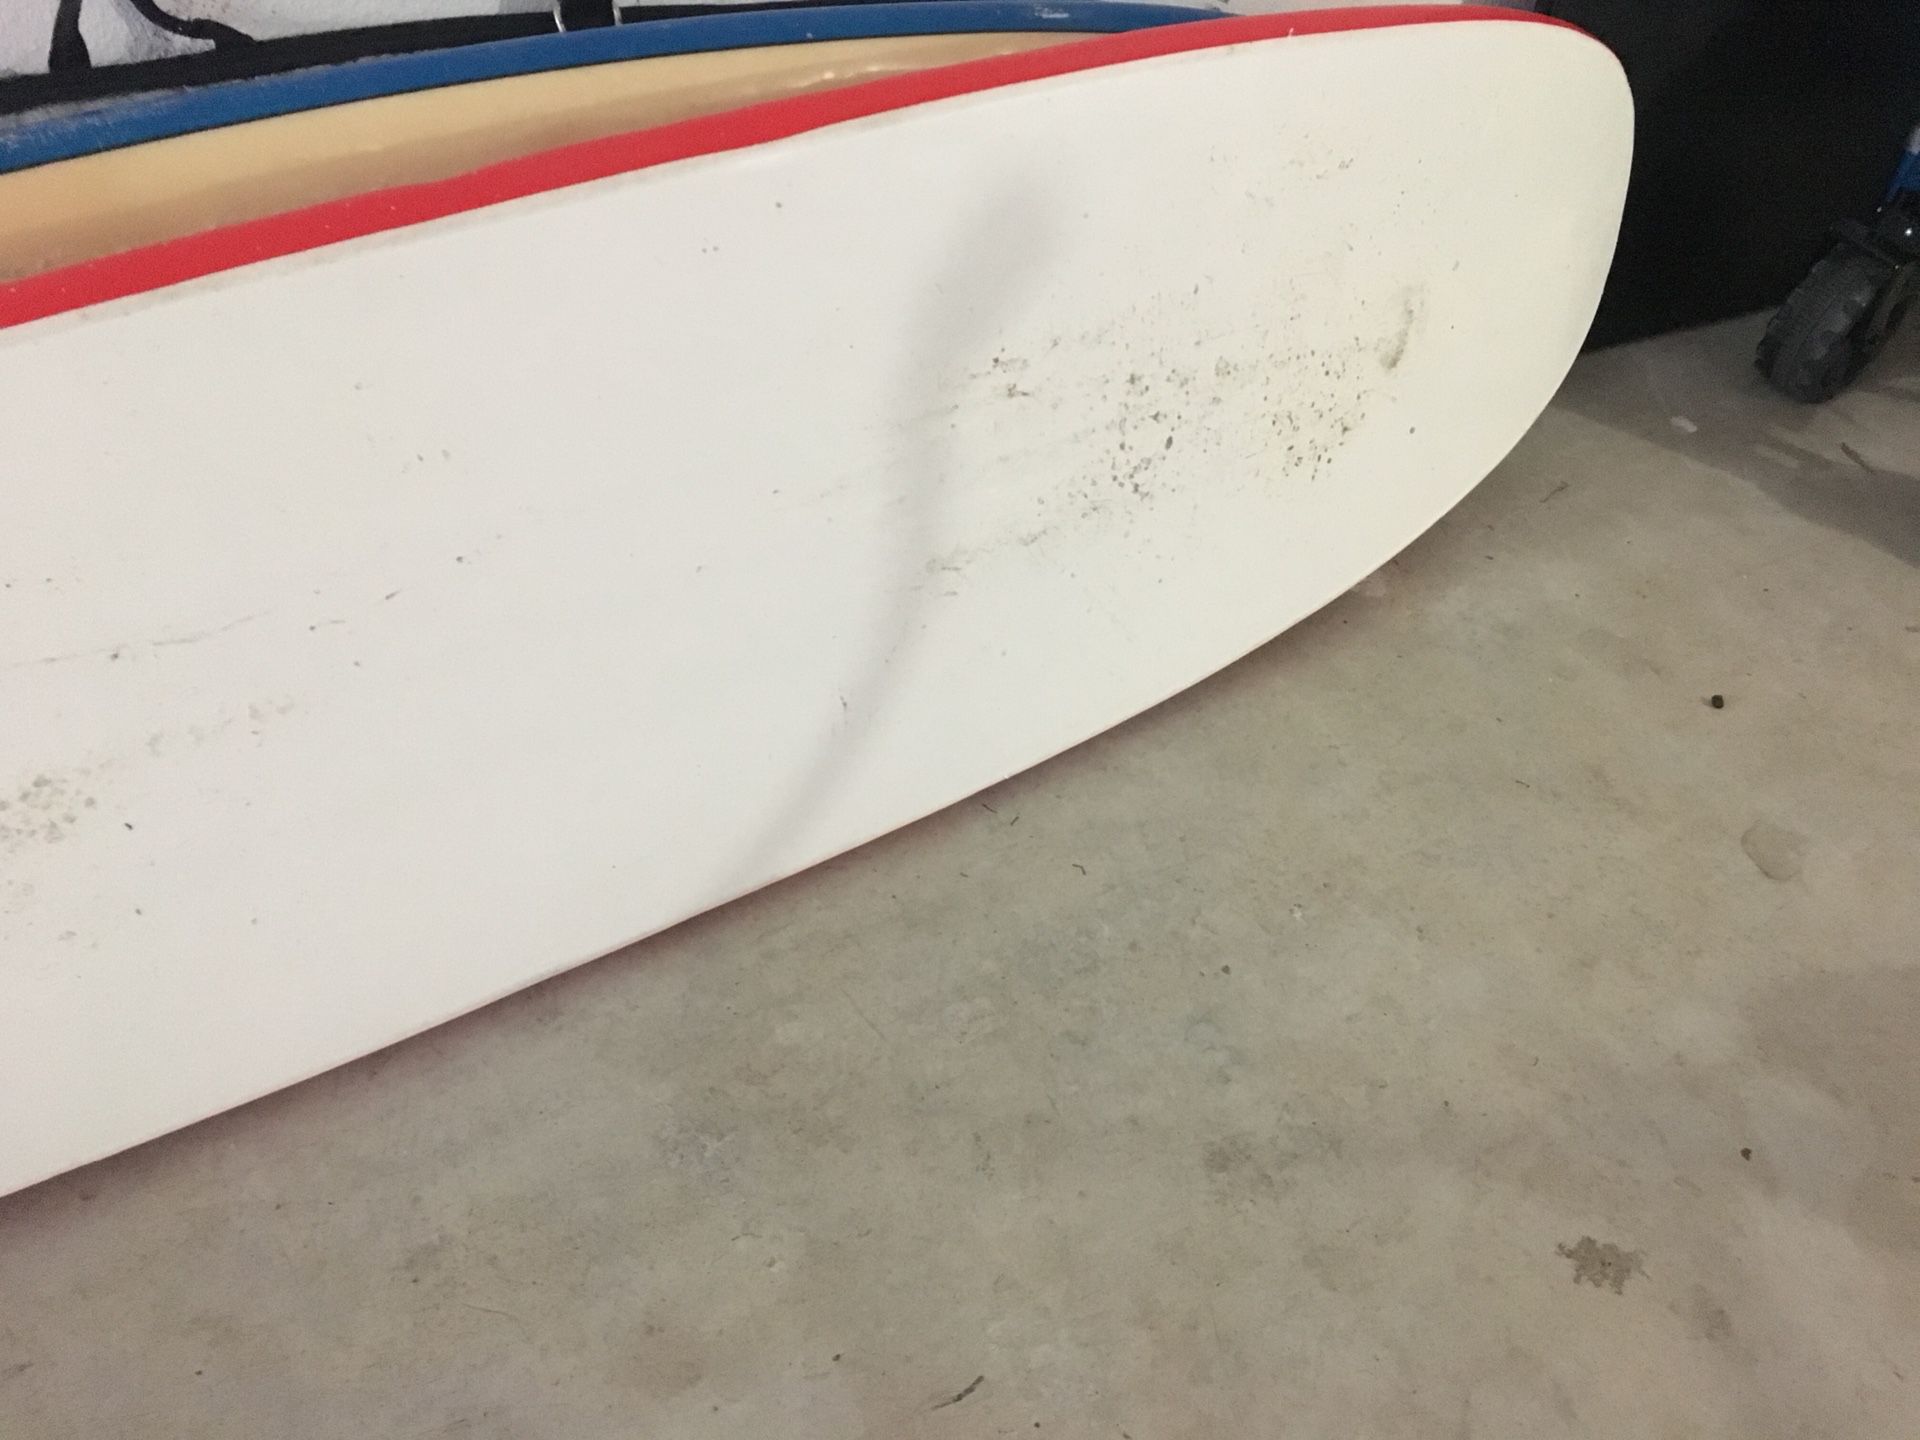 Wavestorm surfboard